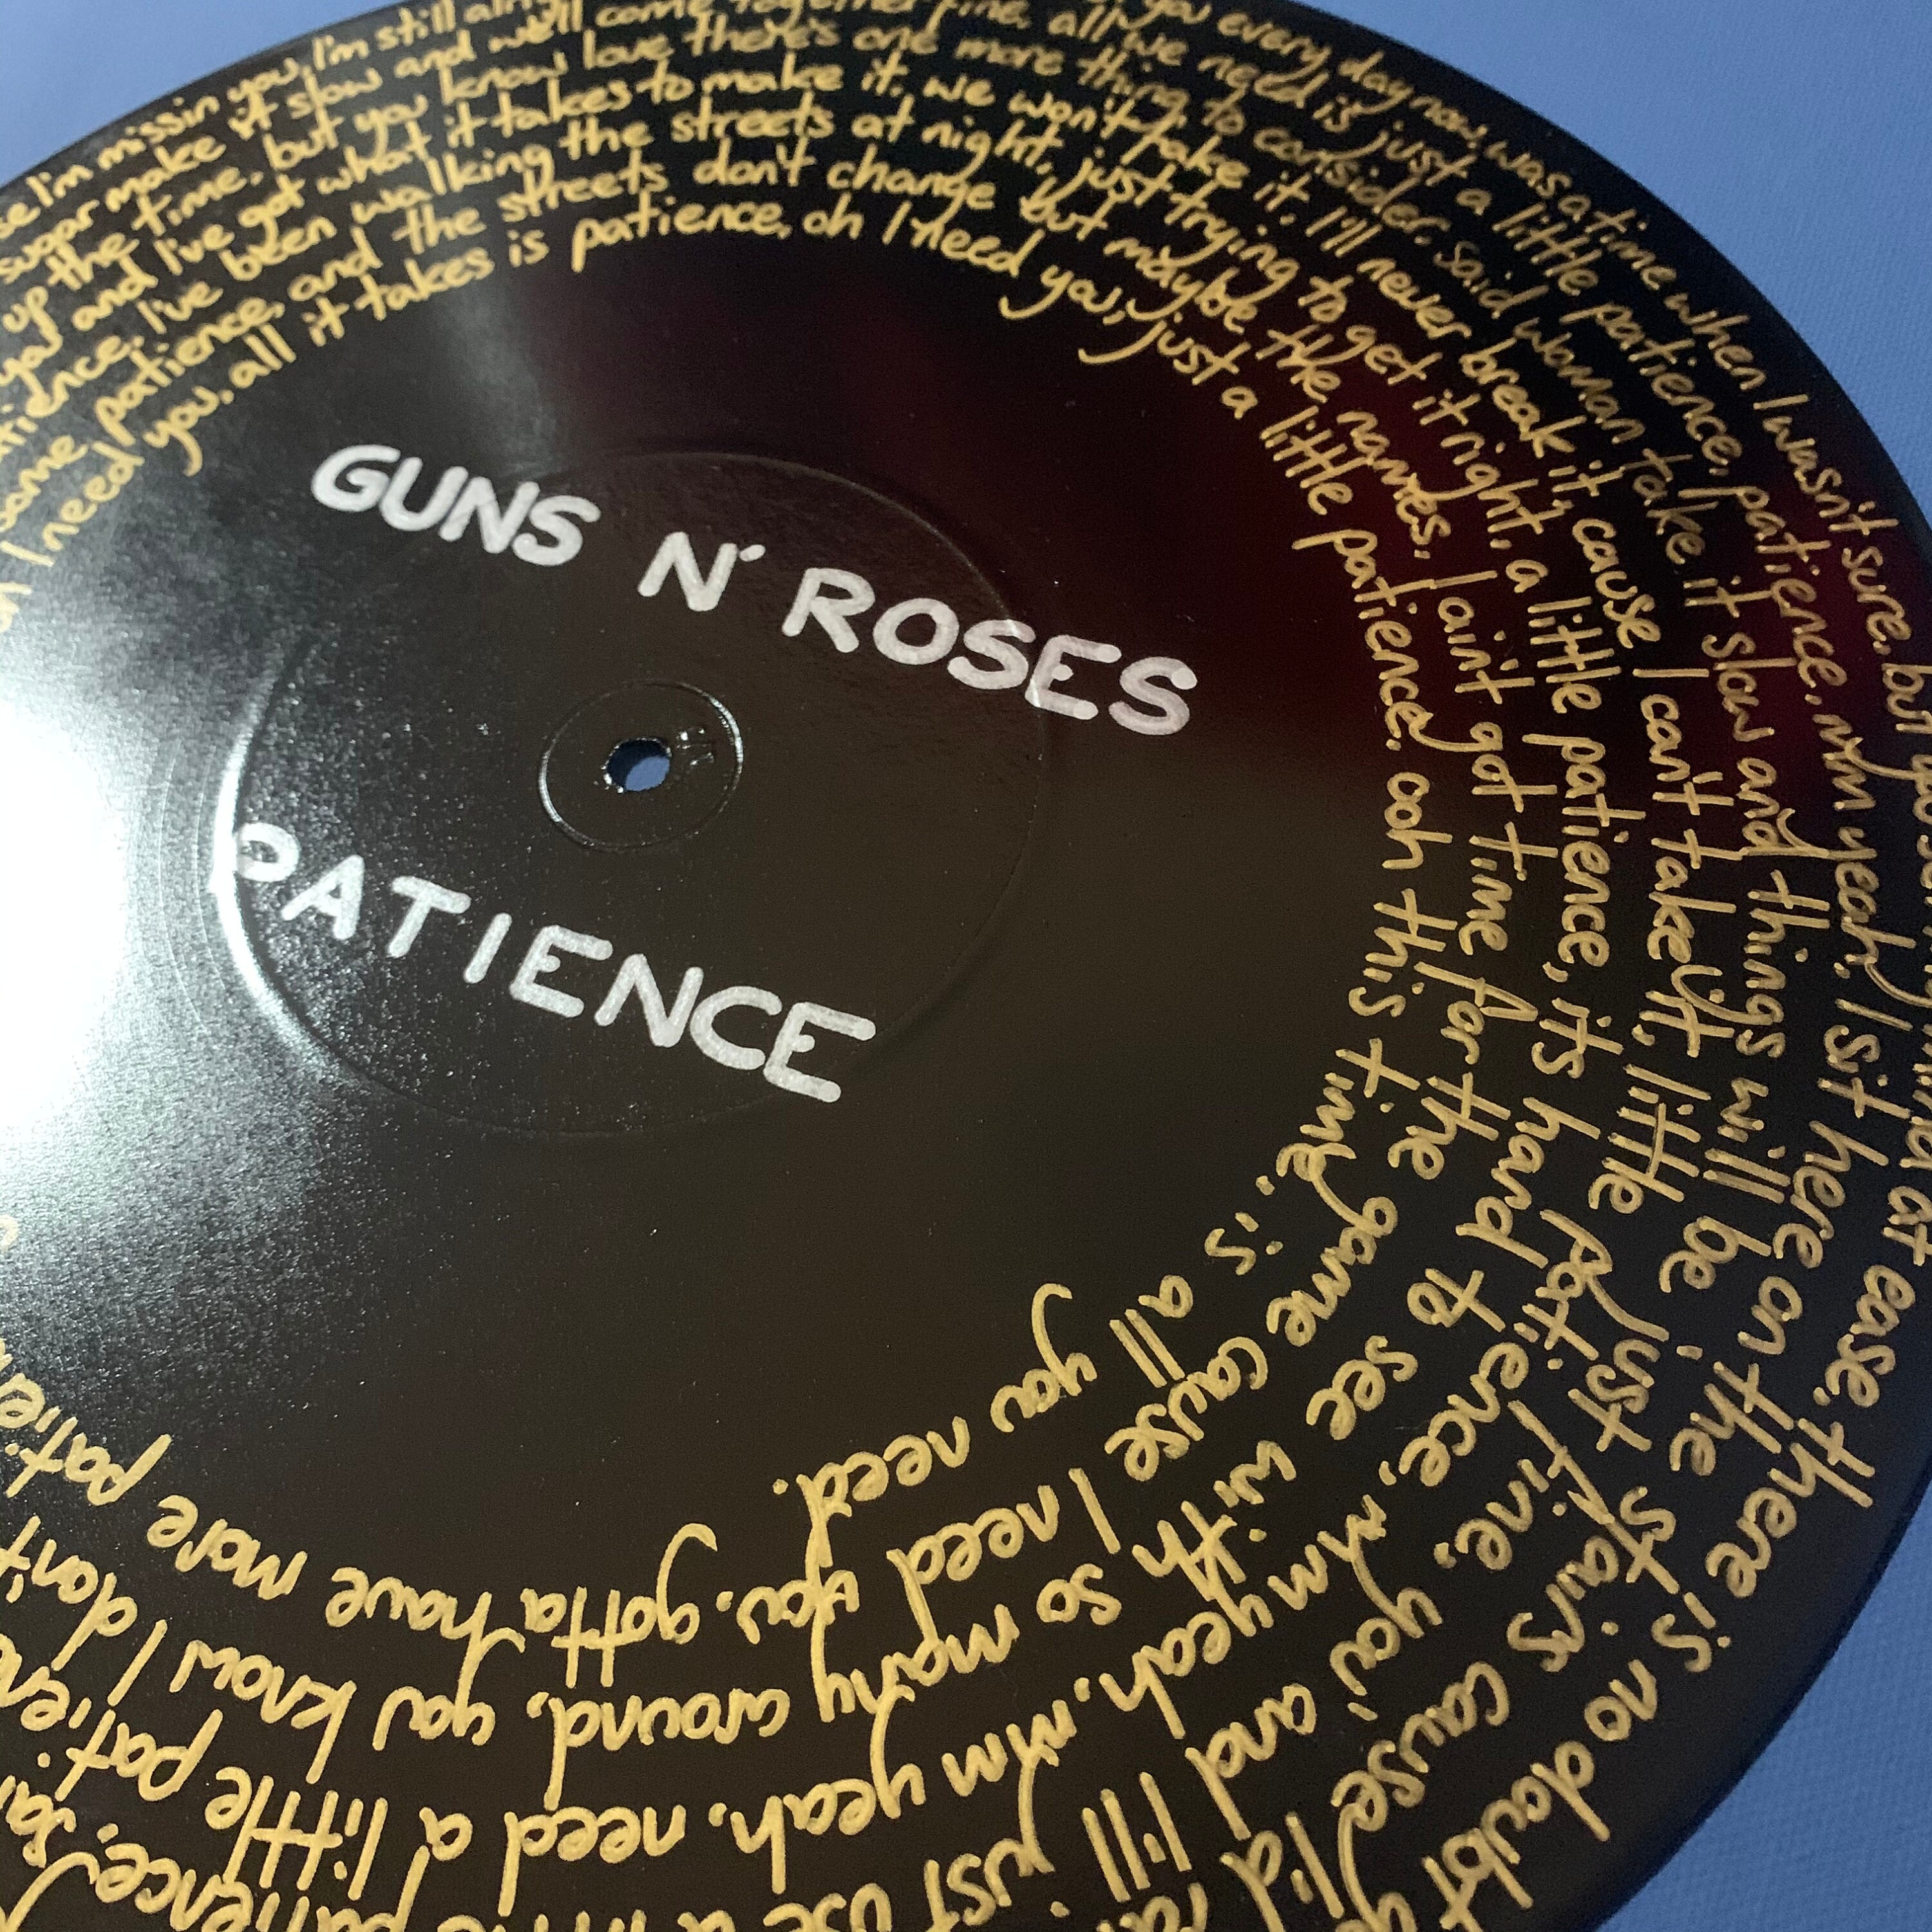 Patience by Guns n' Roses - Song Lyric Poster Illustration – Song Lyrics Art